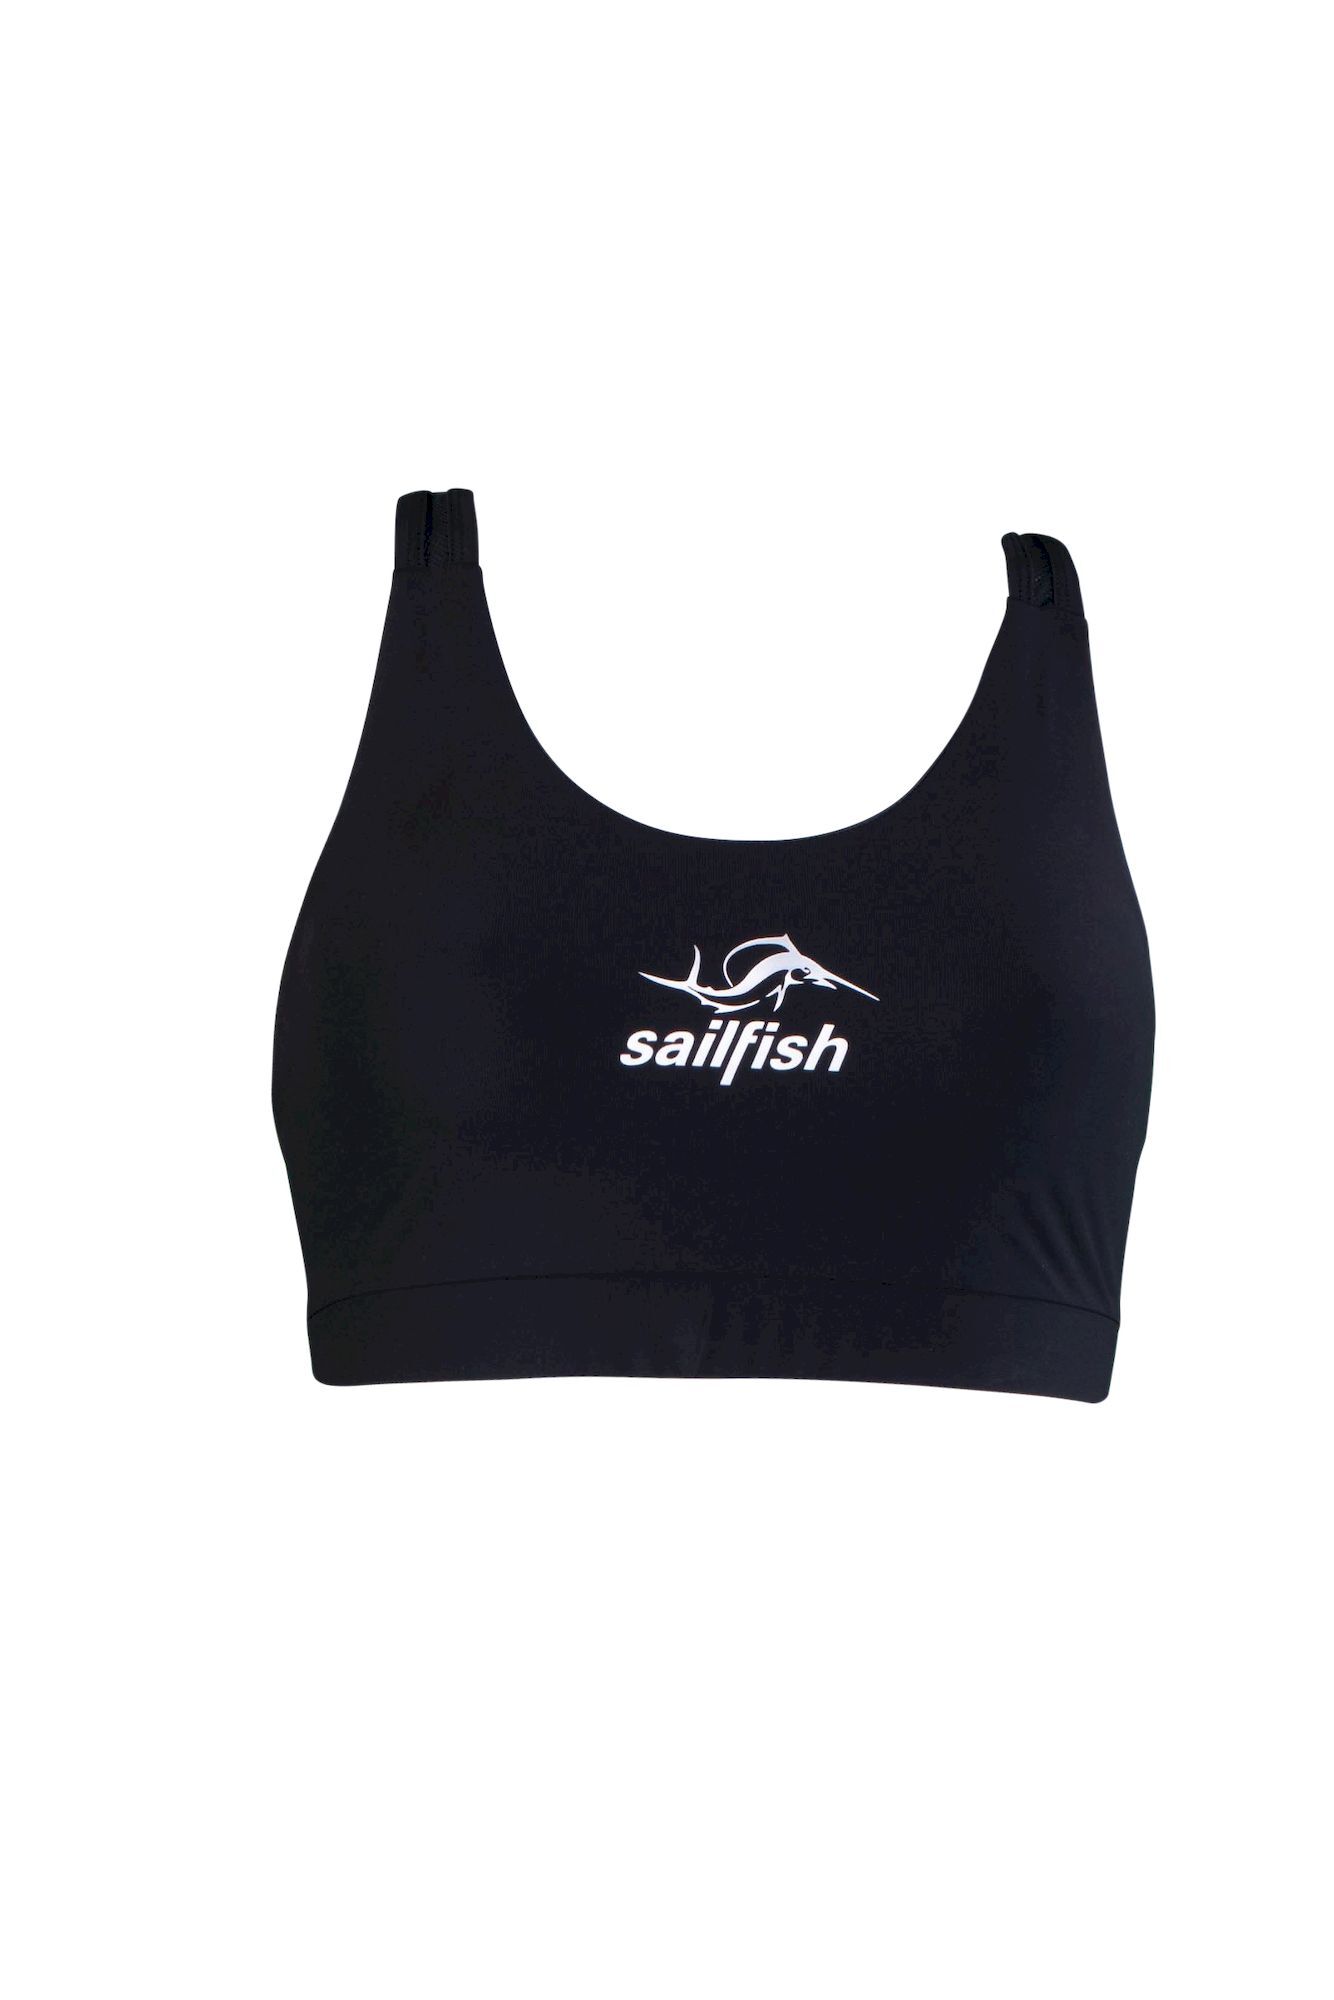 Sailfish Womens Tribra Perform - Tri suit - Women's | Hardloop